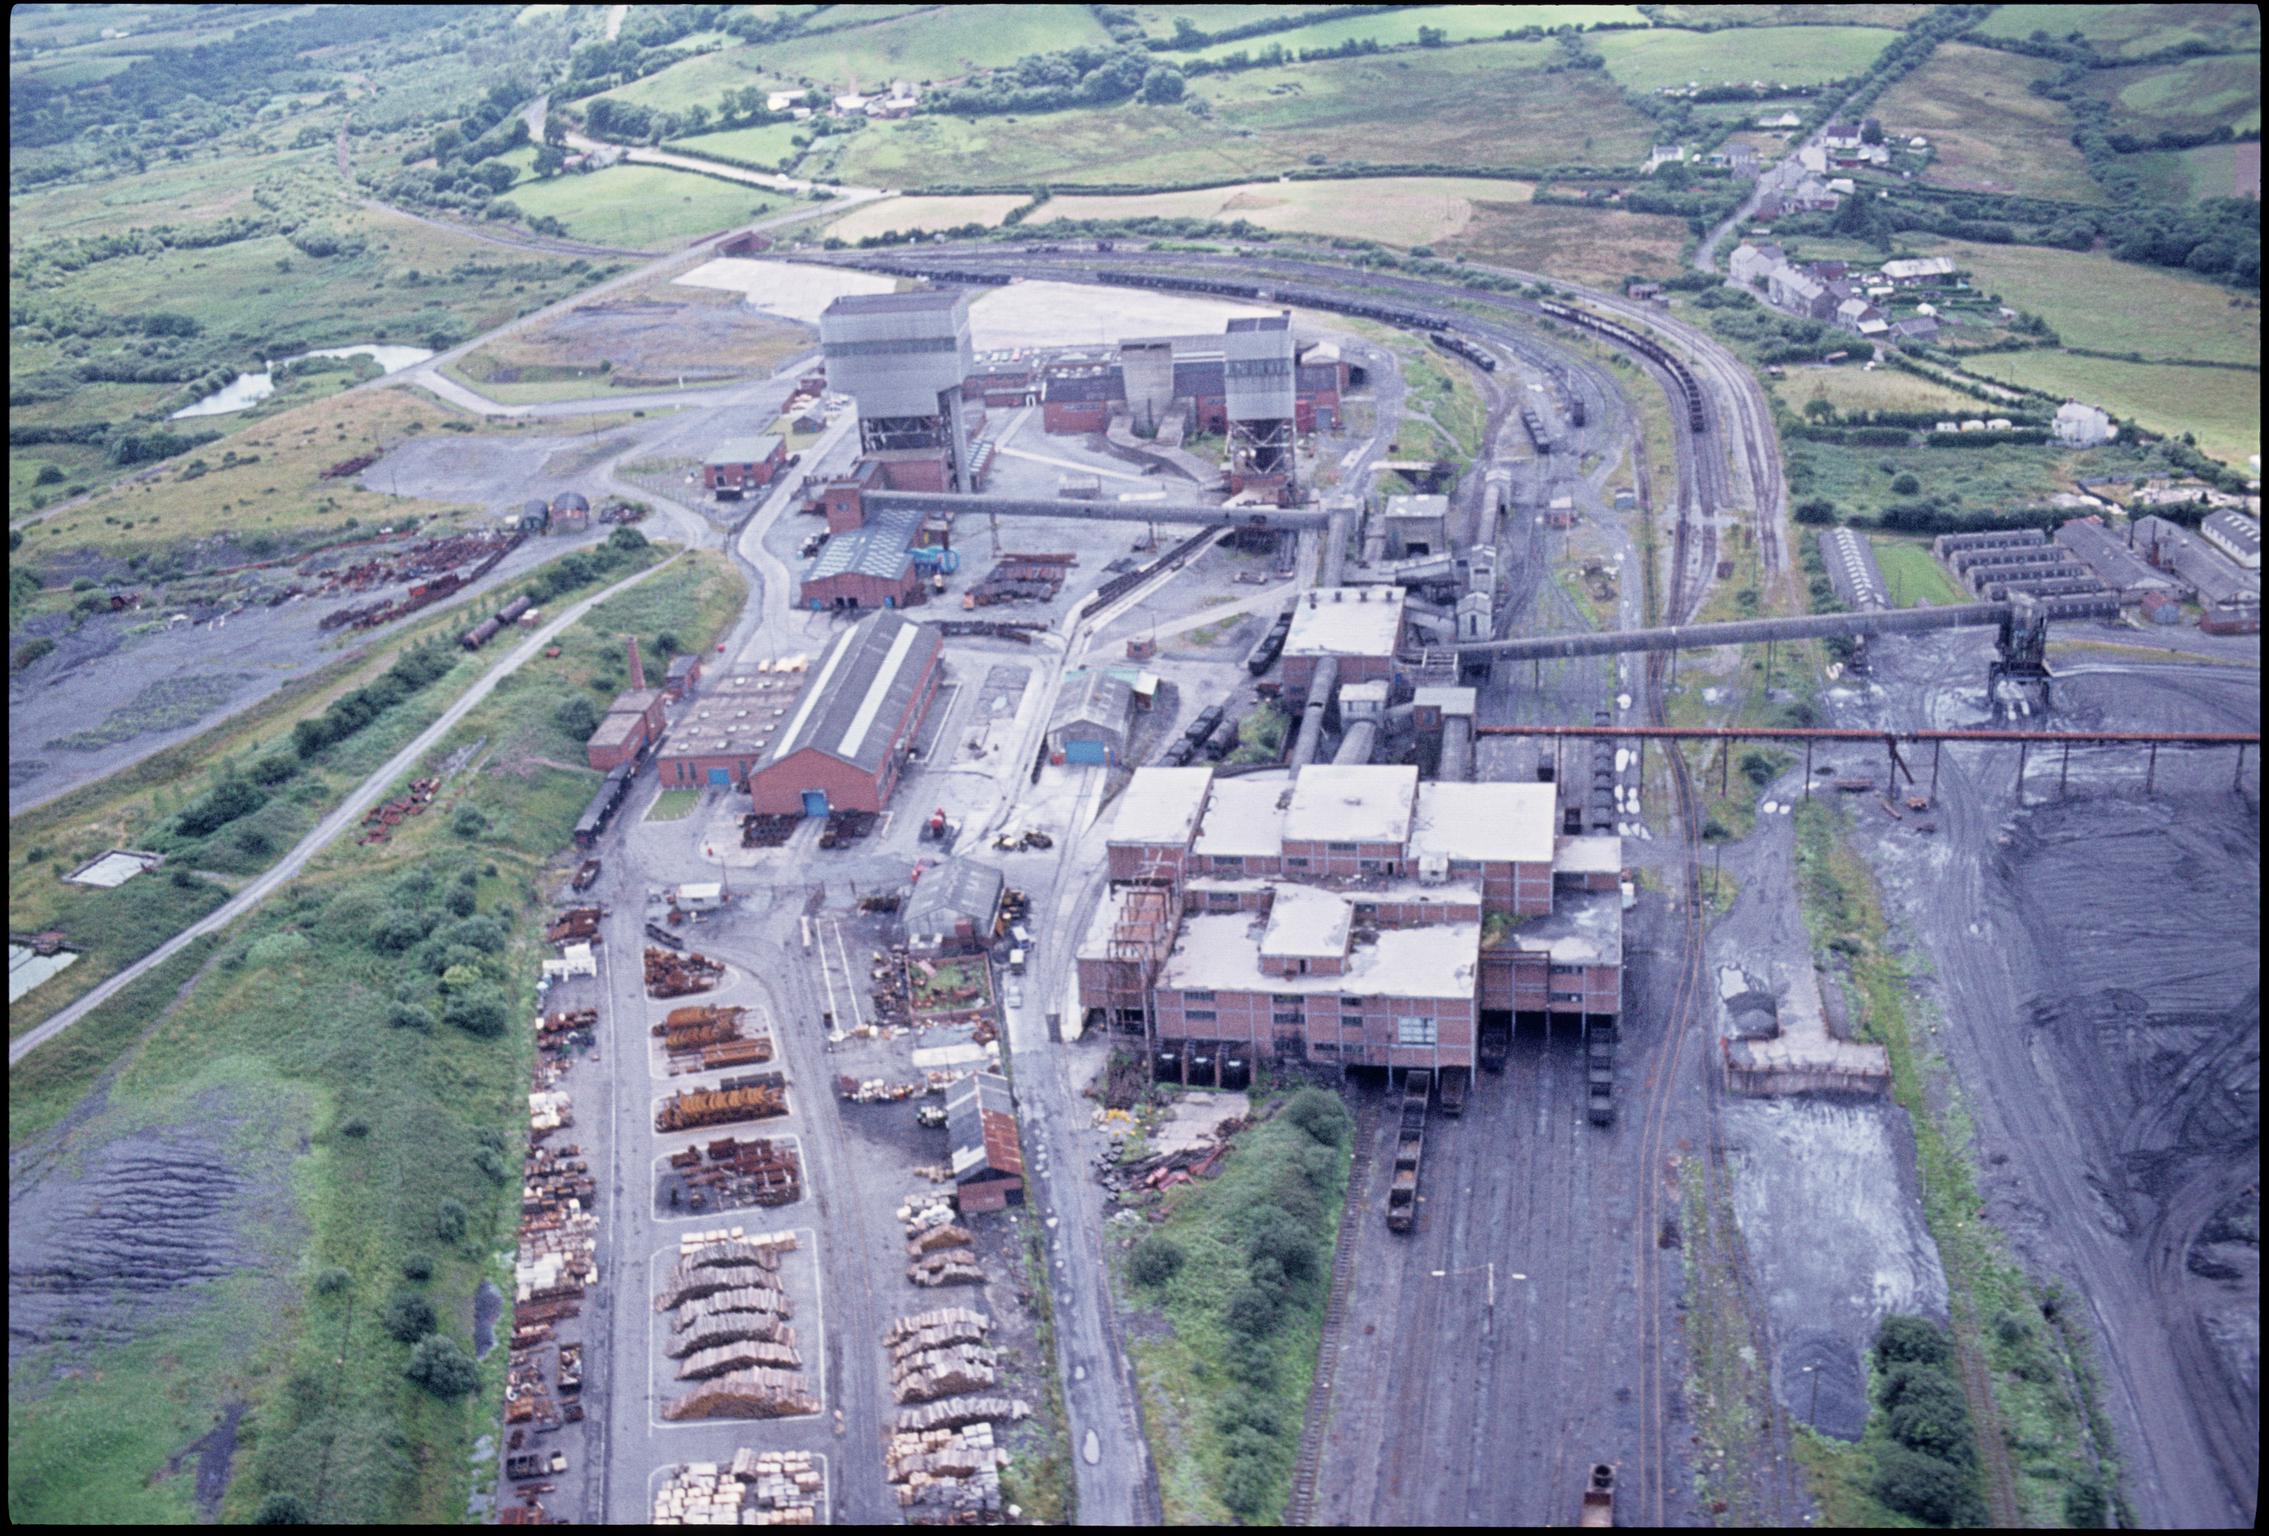 Cynheidre Colliery, slide